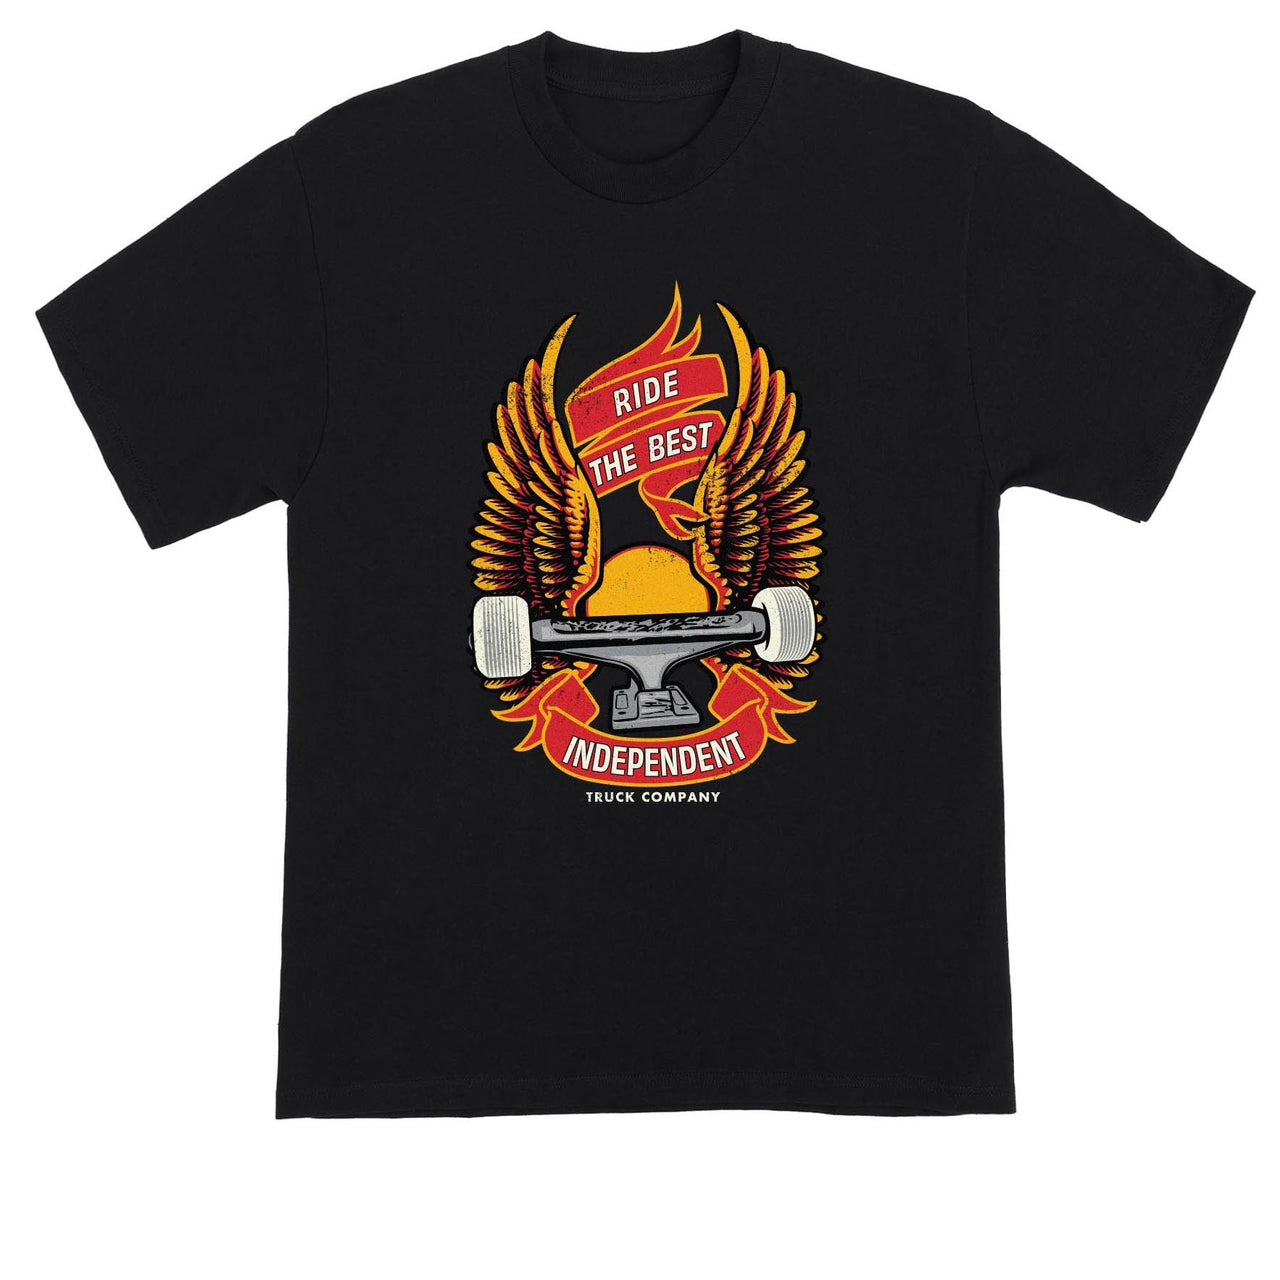 Independent Ride Free T-Shirt - Black image 1